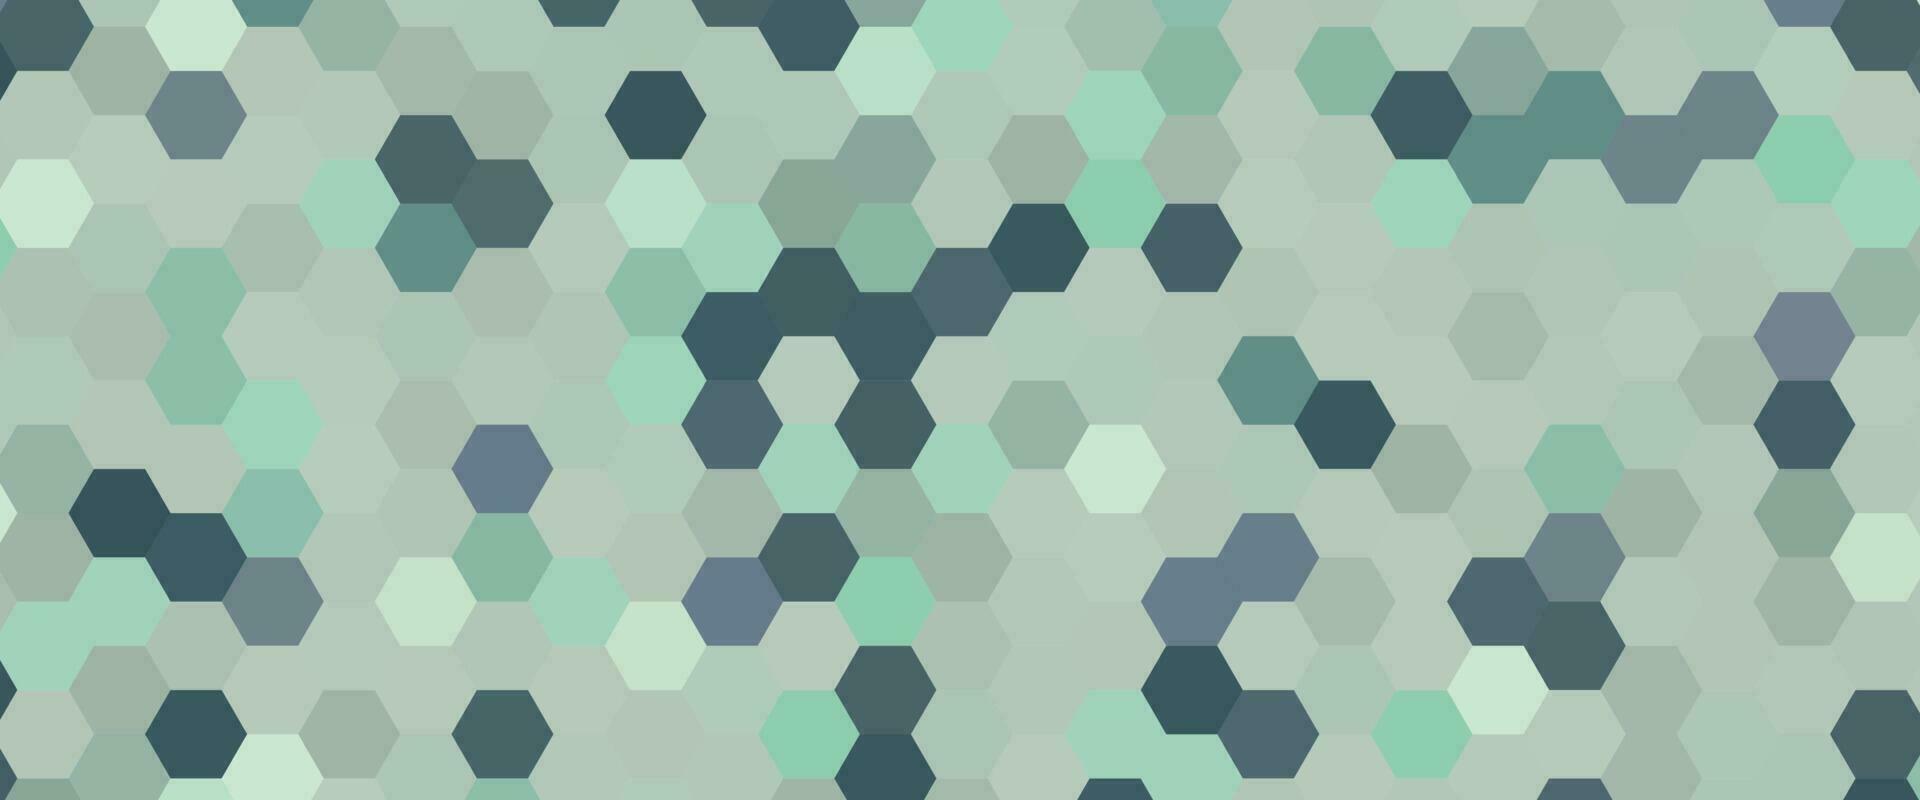 abstrakt hexagonal bakgrund. trogen teknologi begrepp. vektor